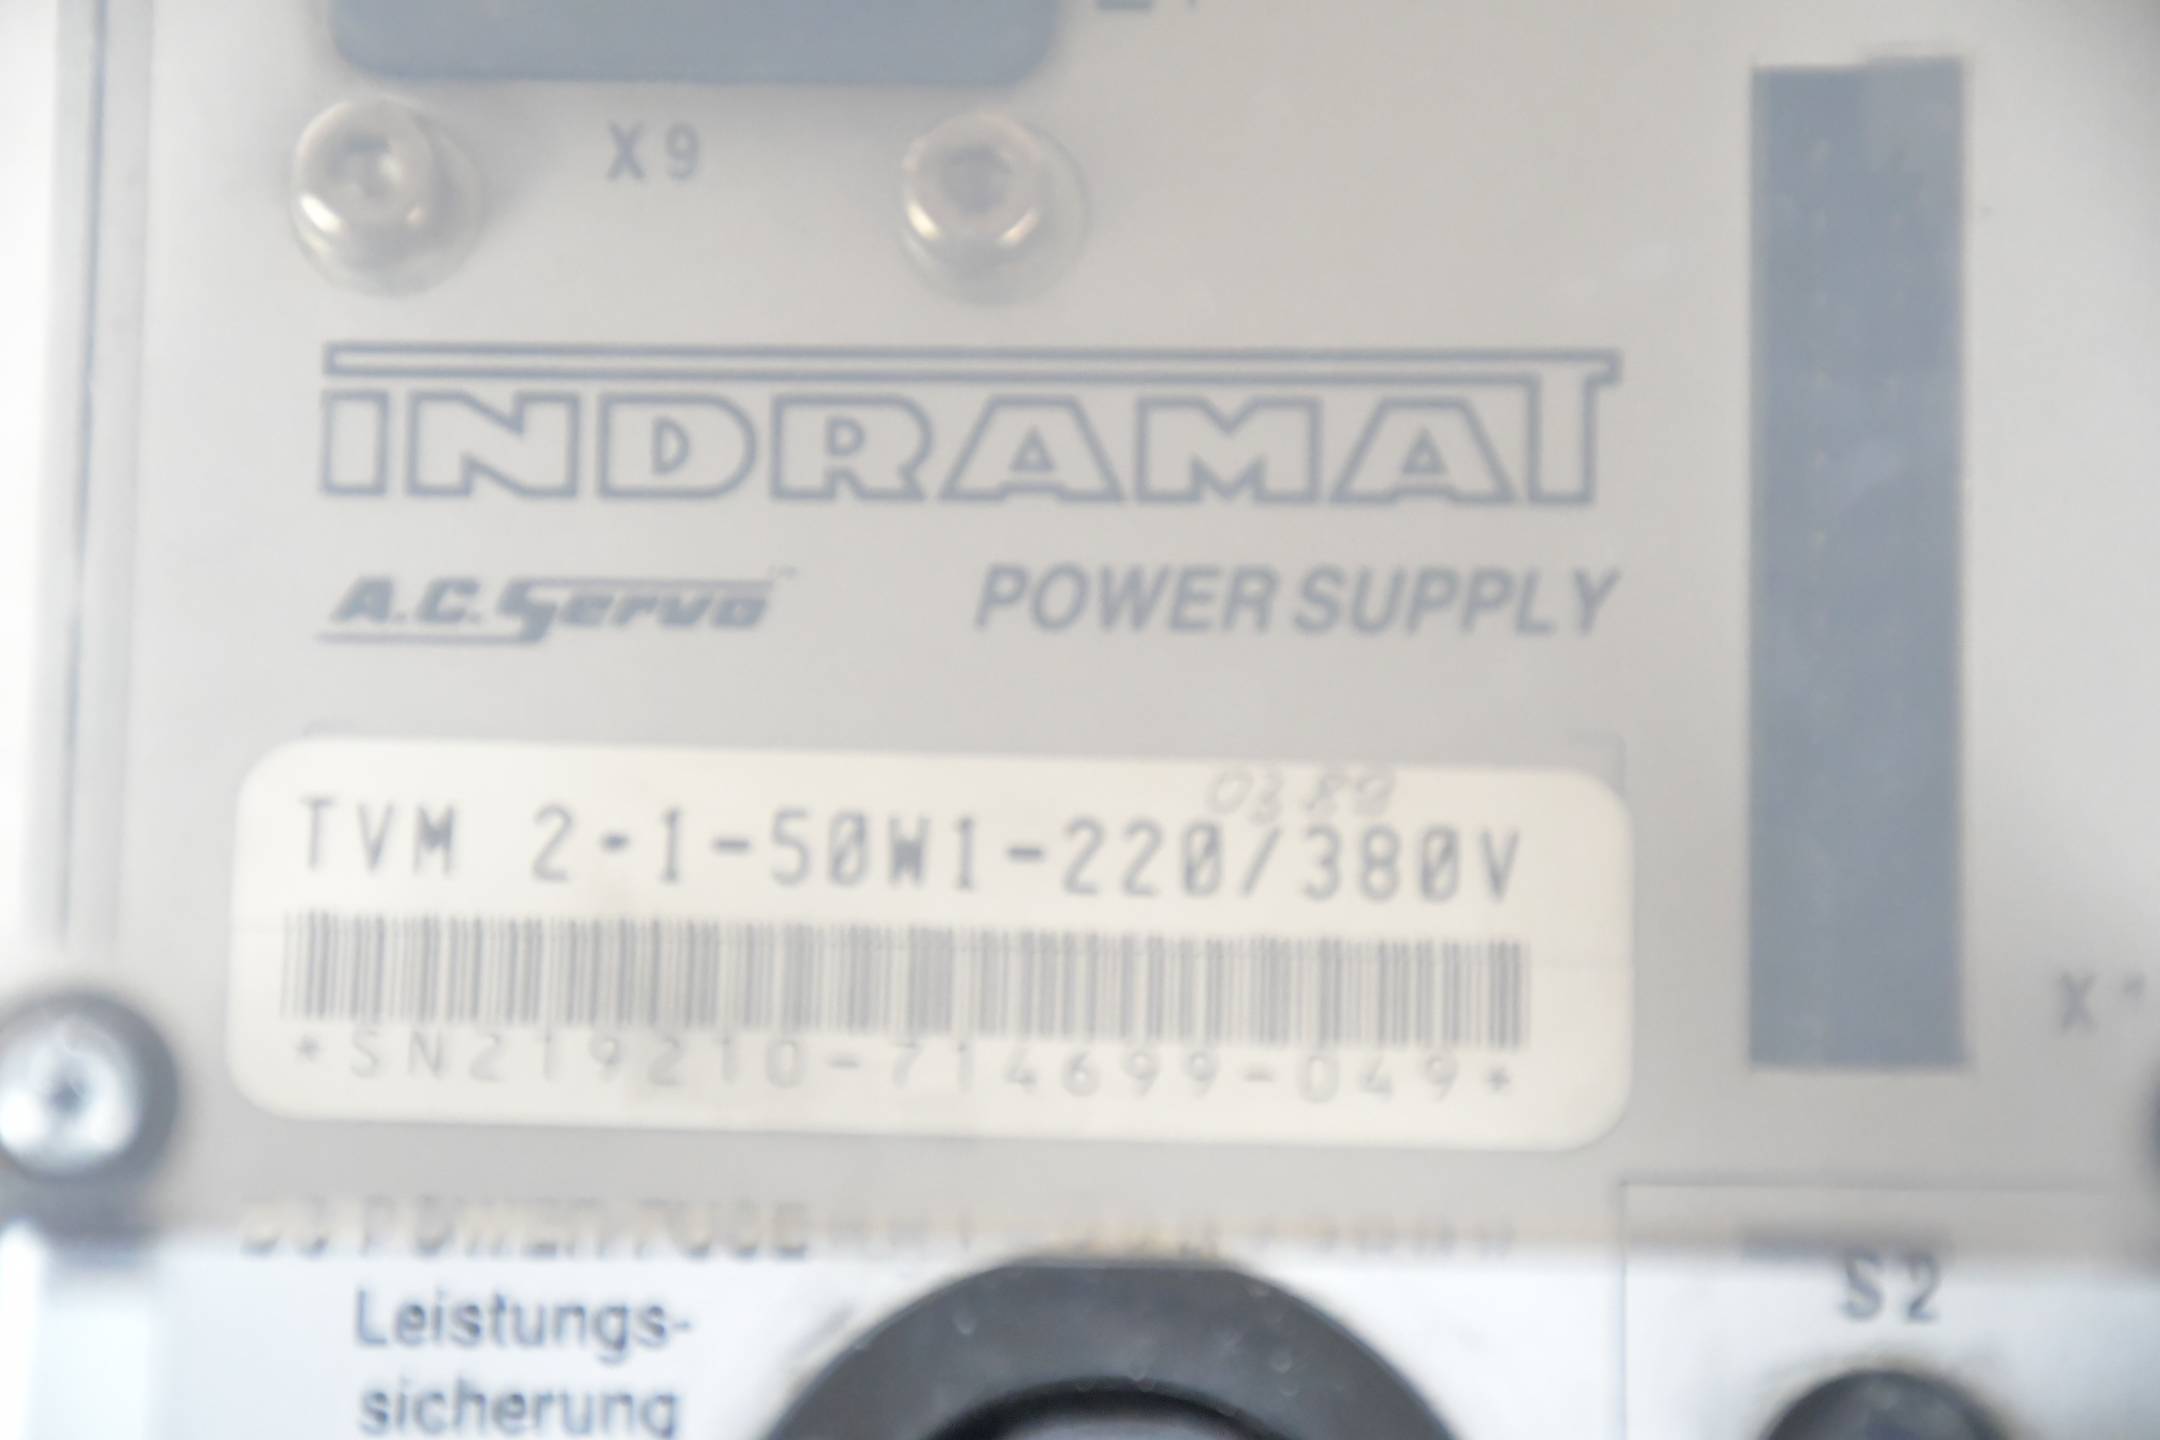 Indramat A.C. Servo Power Supply TVM 2.1-50W1-220/380V